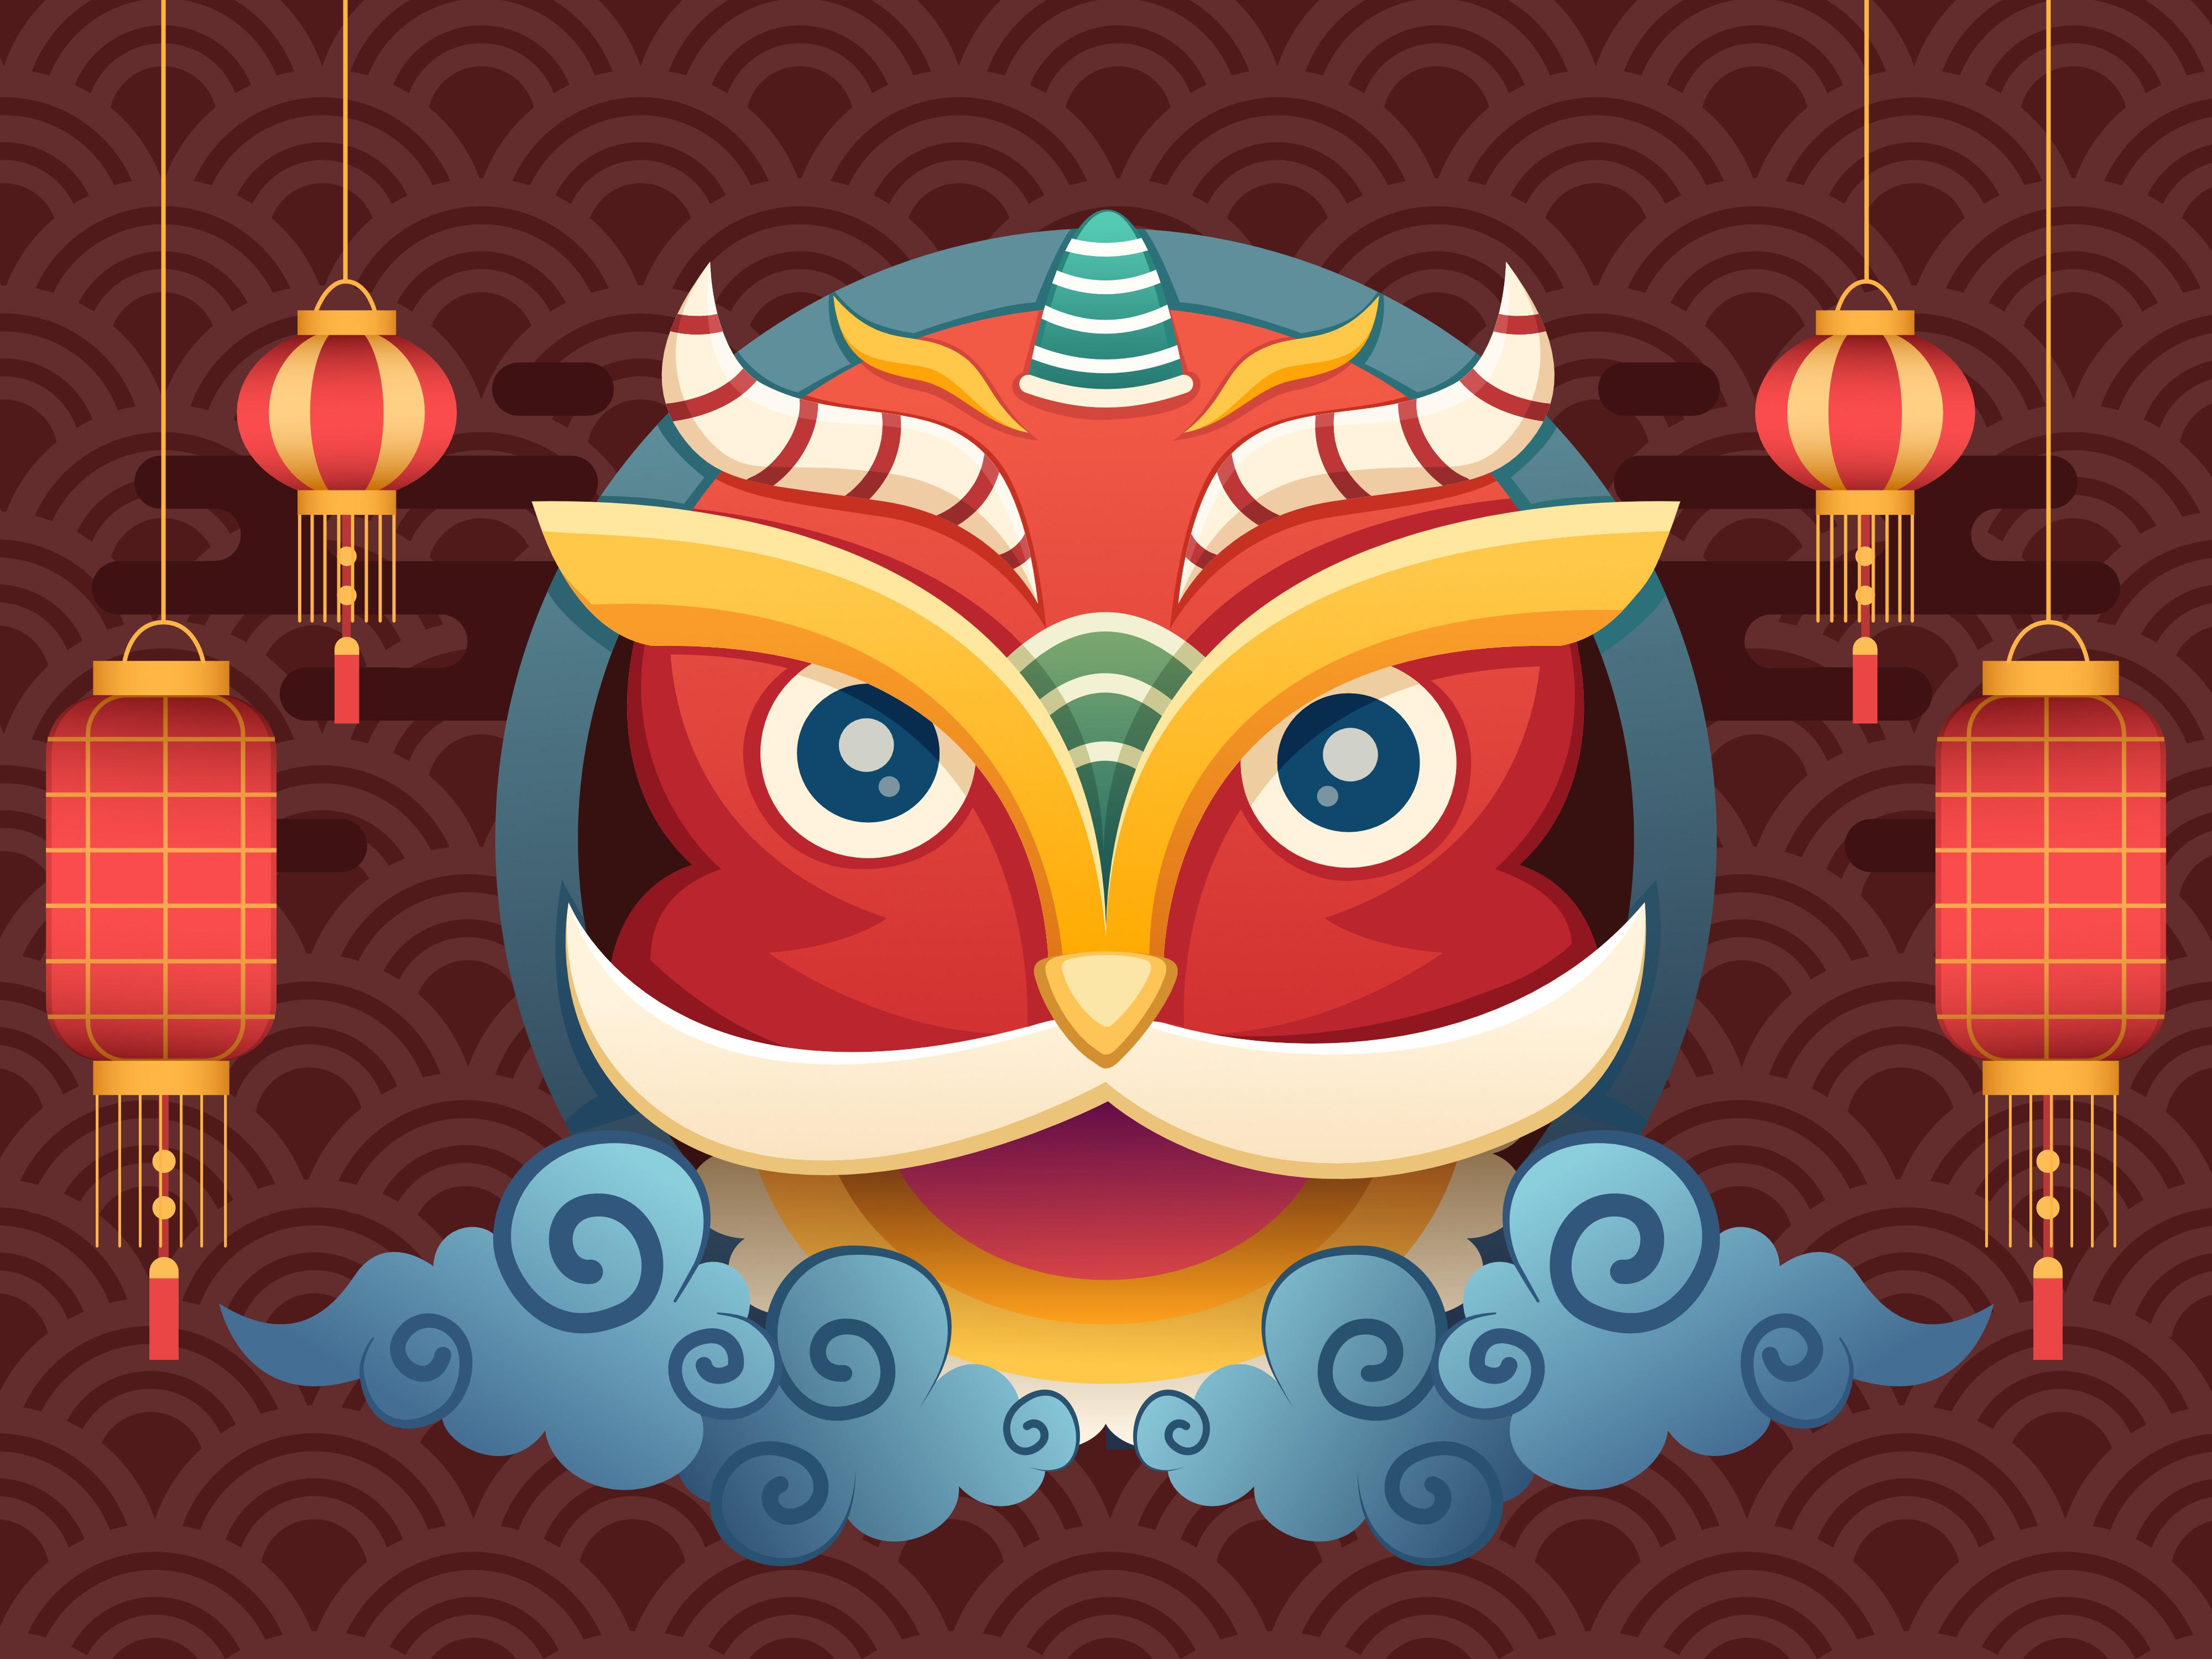 Chinese Lion Dance Head Illustration